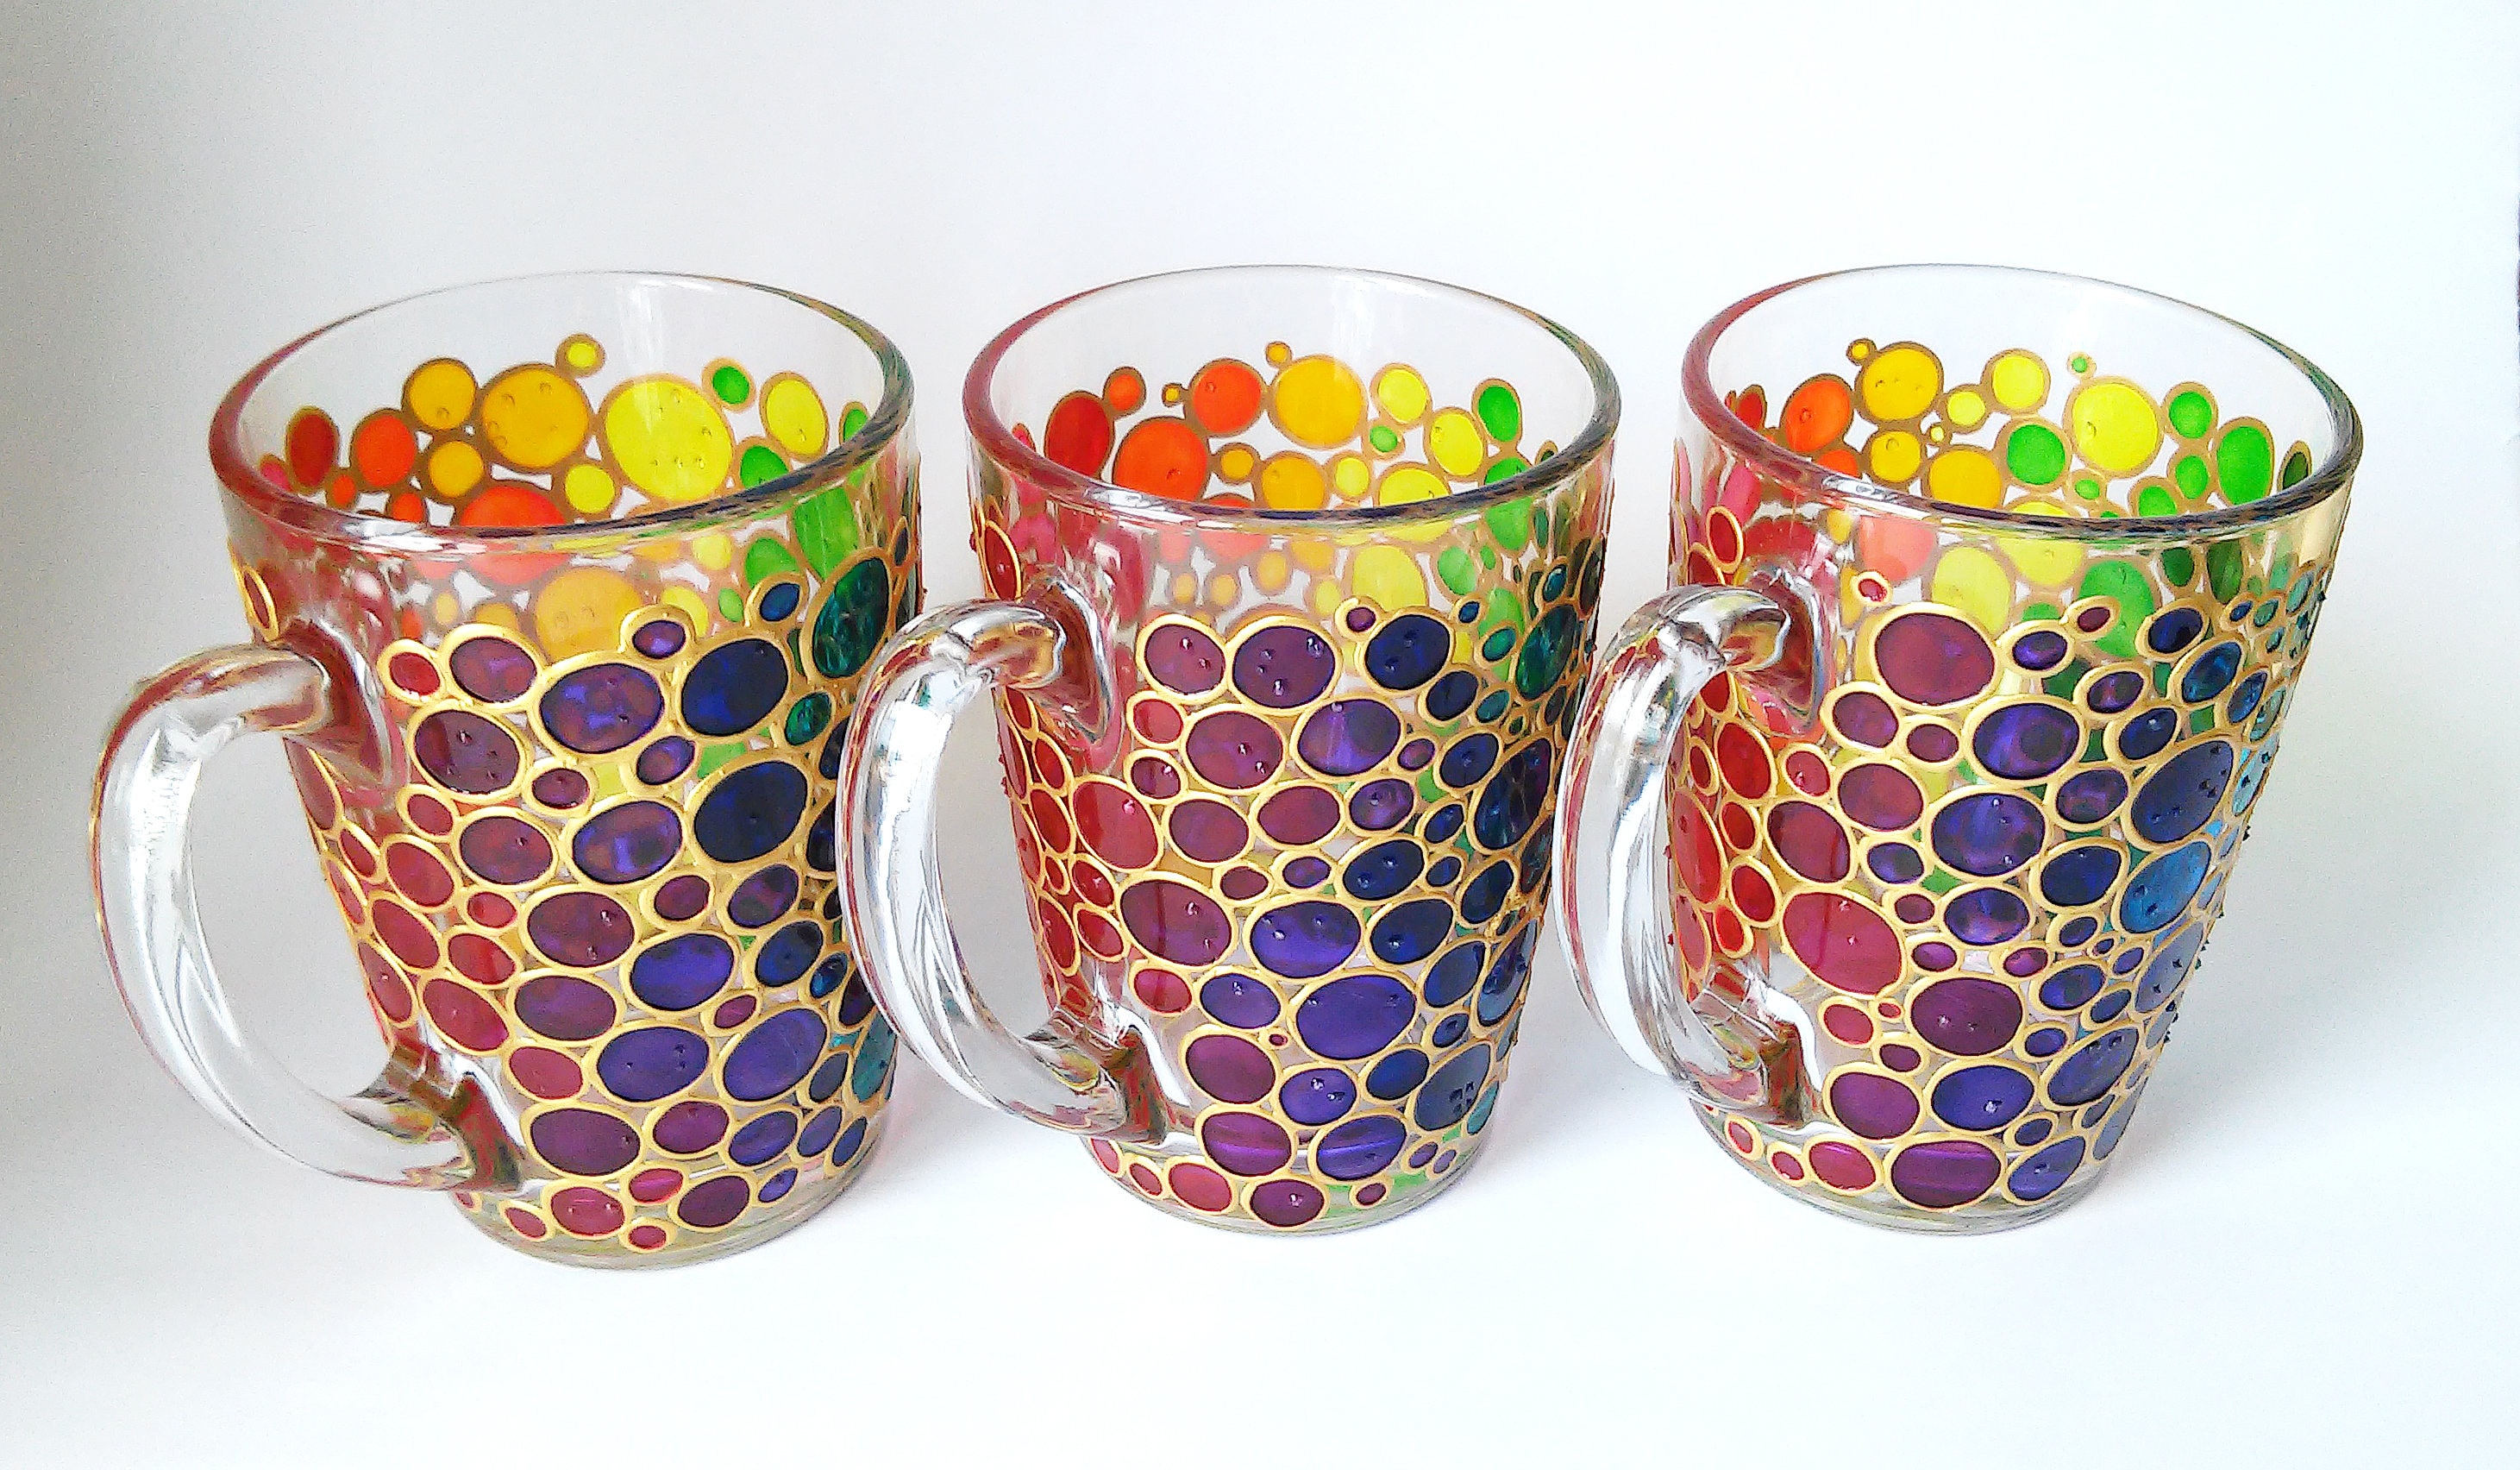 Rainbow Coffee Mug Gift, Colorful Hand Painted Glass Mug With Bubbles Design  